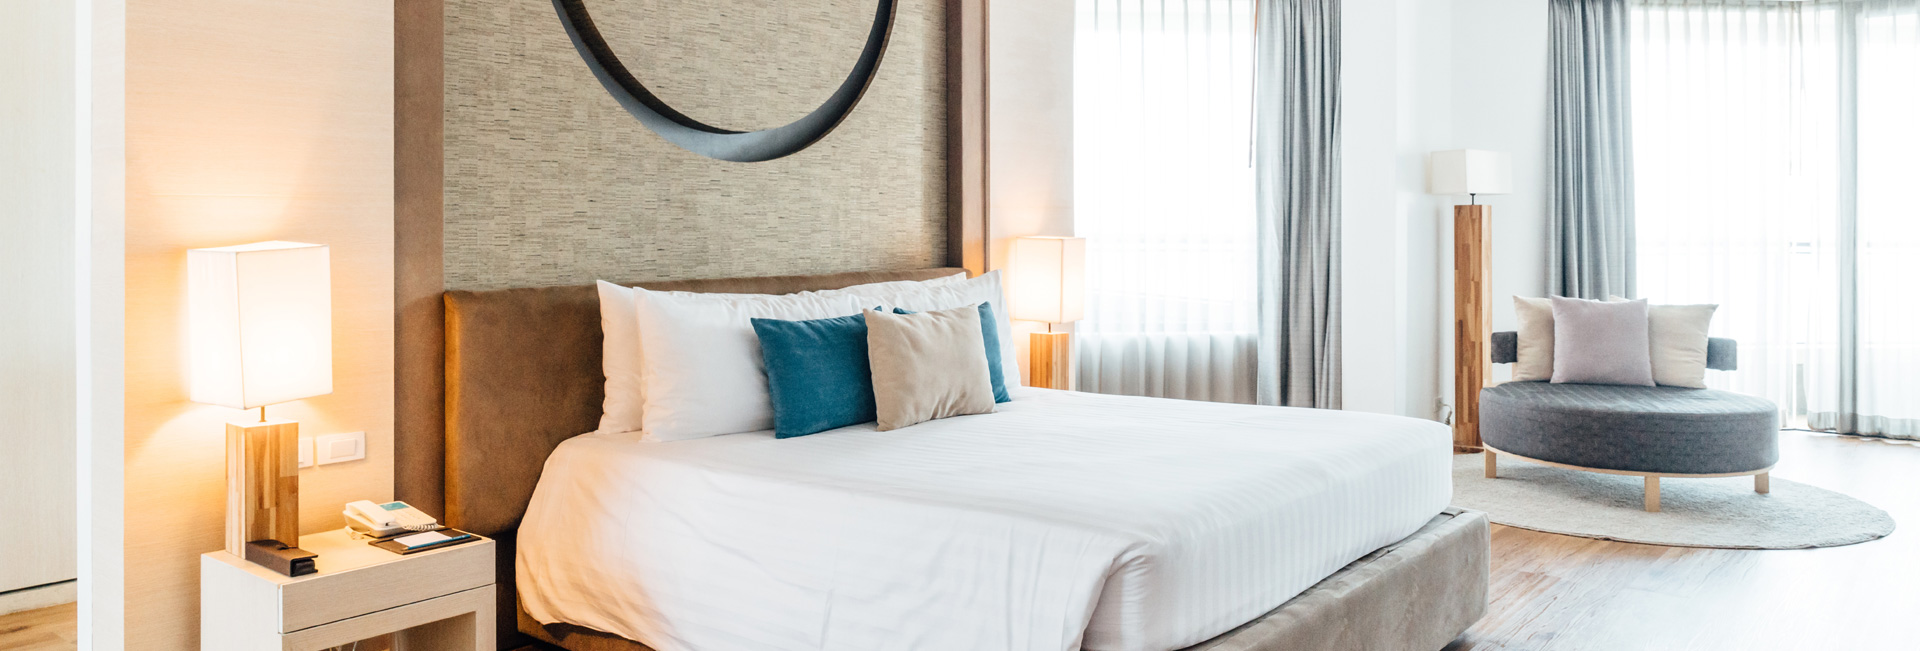 Two-Bedroom Suites | Luxury Accommodations in San Juan | Condado Vanderbilt